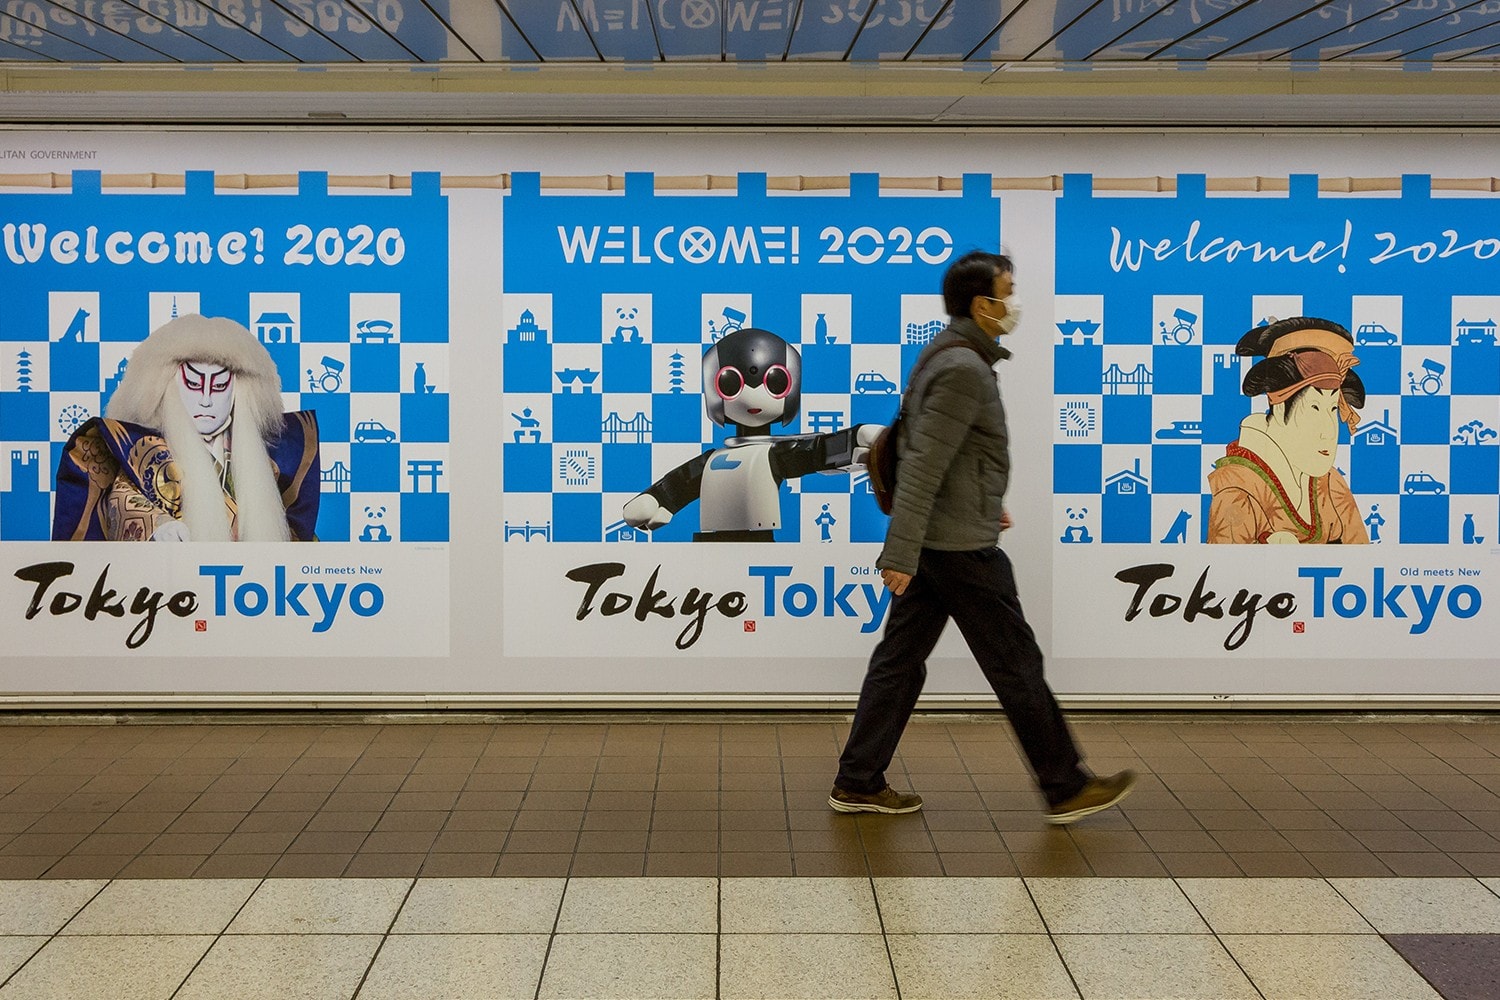 2020 tokyo olympics cancellation rumors denied japan metro subway posters 